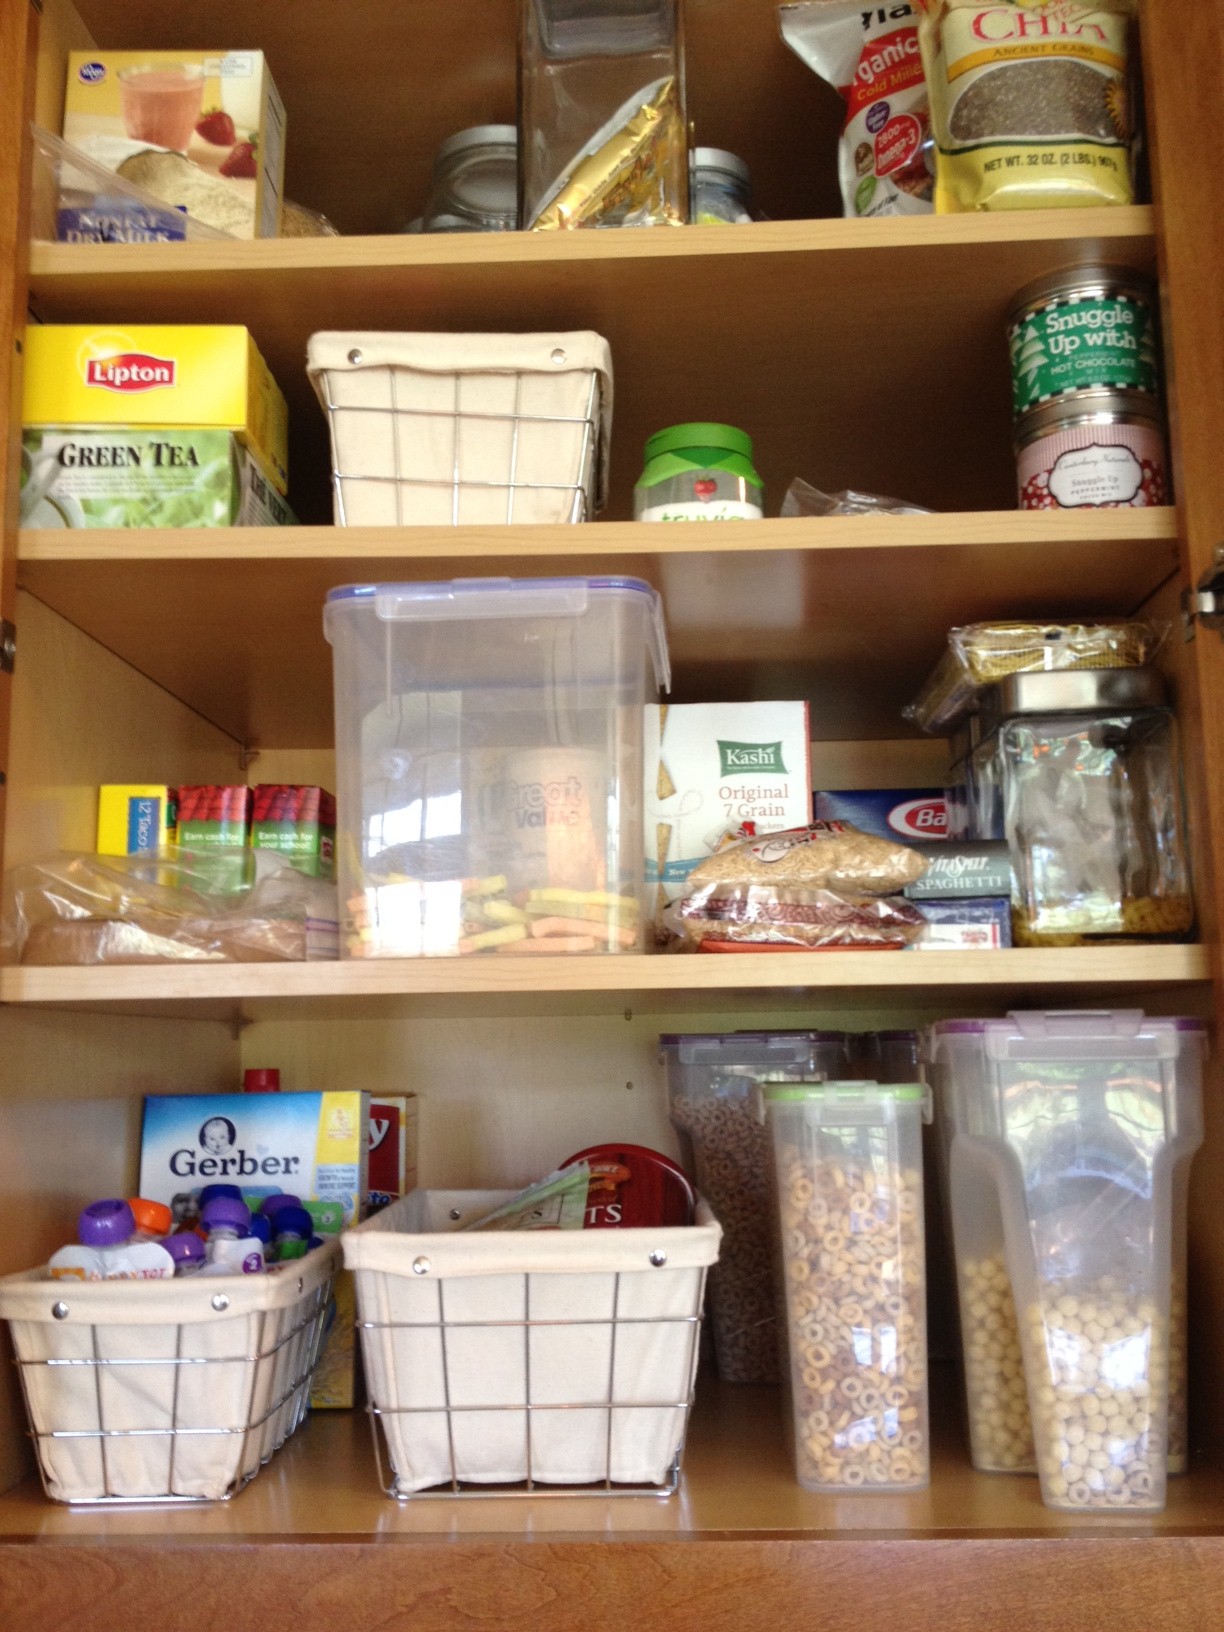 https://homefitnessgurus.com/wp-content/uploads/2012/07/Organize-your-kitchen-pantry-8.jpg